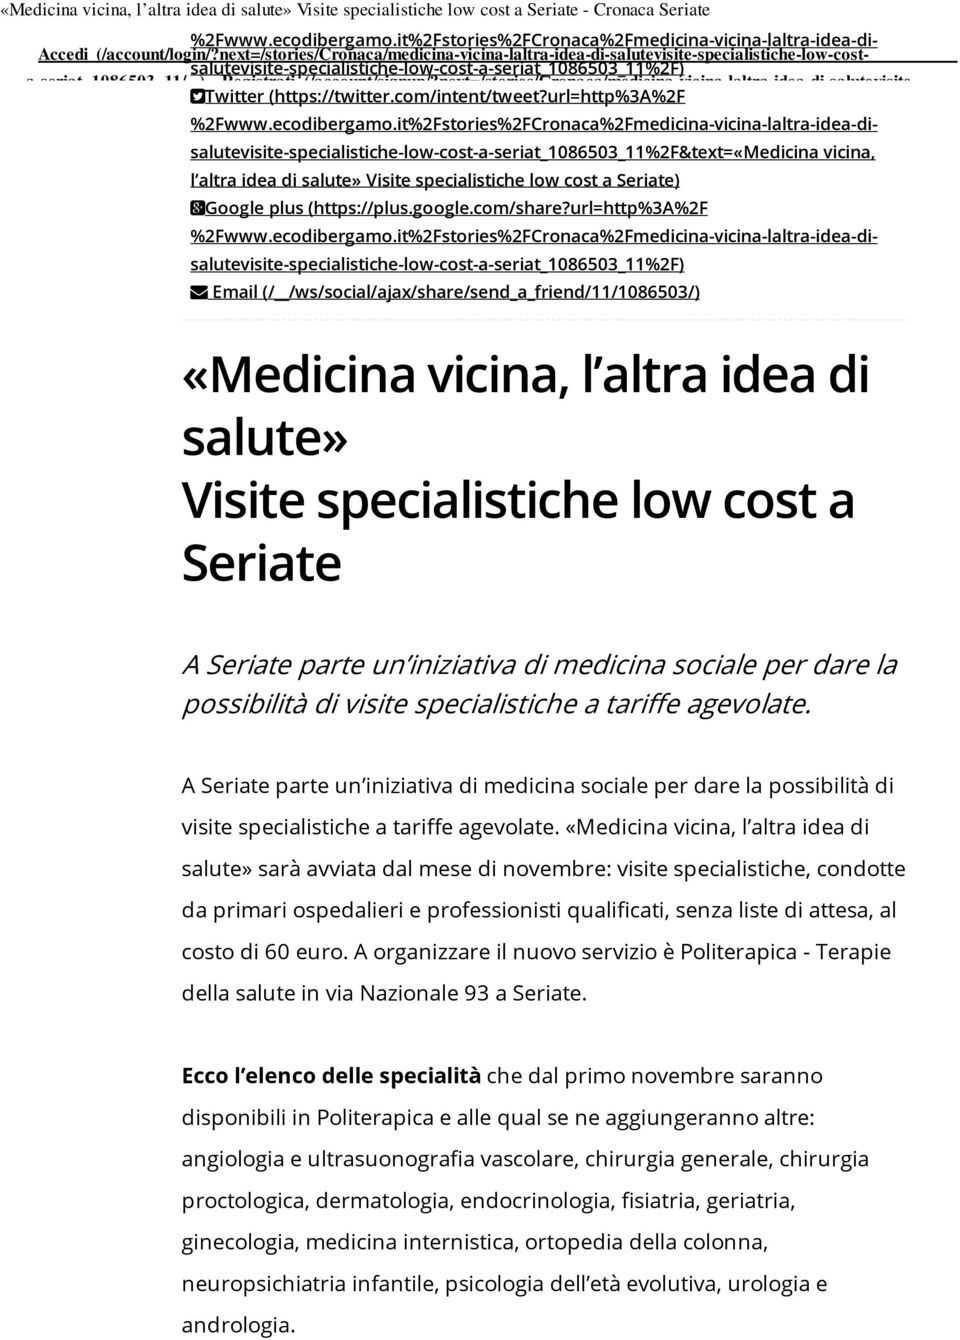 next=/stories/cronaca/medicina-vicina-laltra-idea-di-salutevisite- Twitter (https://twitter.com/intent/tweet?url=http%3a%2f %2Fwww.ecodibergamo.